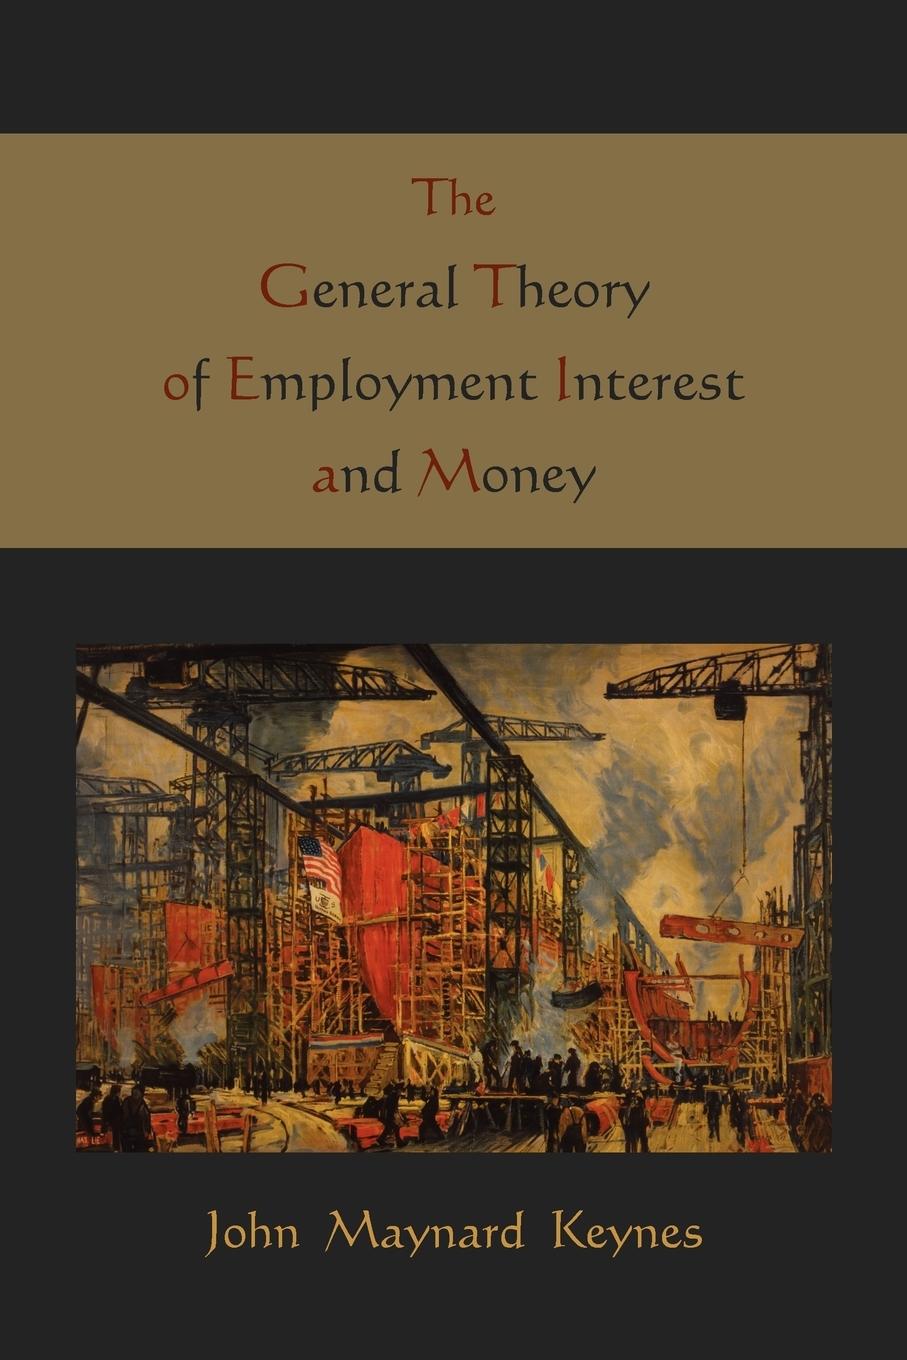 The General Theory of Employment Interest and Money - Keynes, Maynard John Keynes, John Maynard